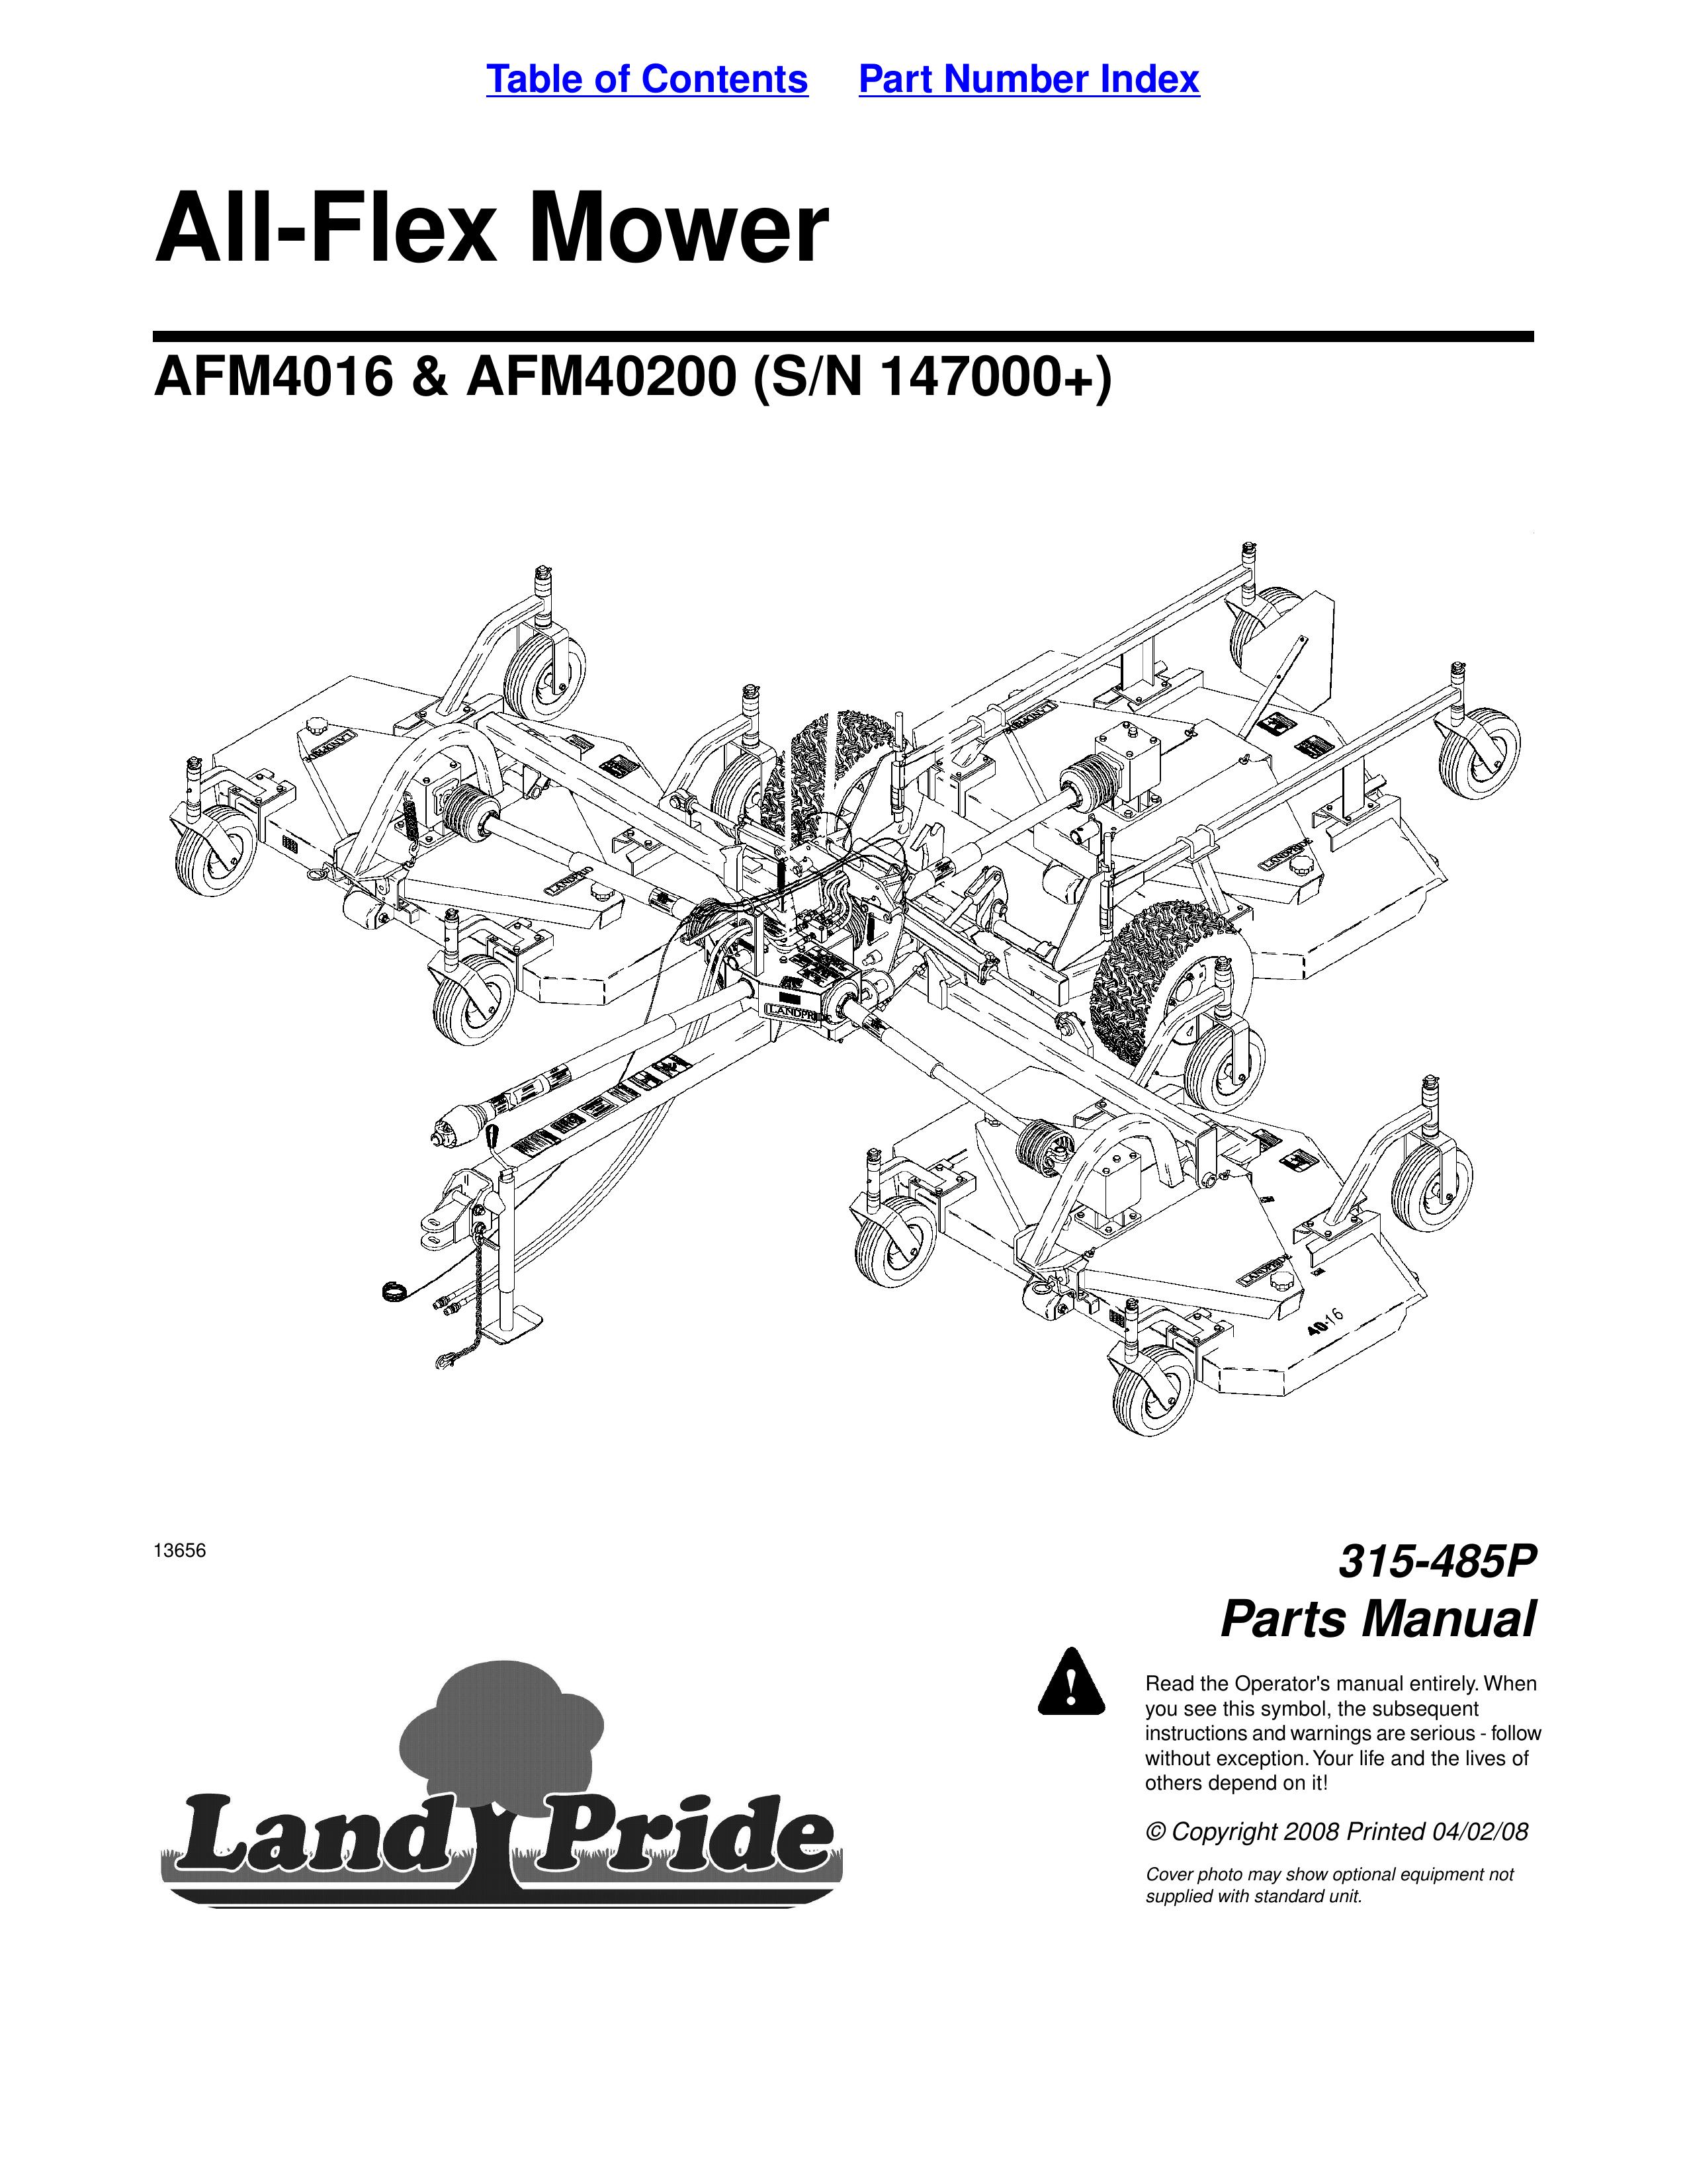 Land Pride All-Flex Mower Lawn Mower User Manual